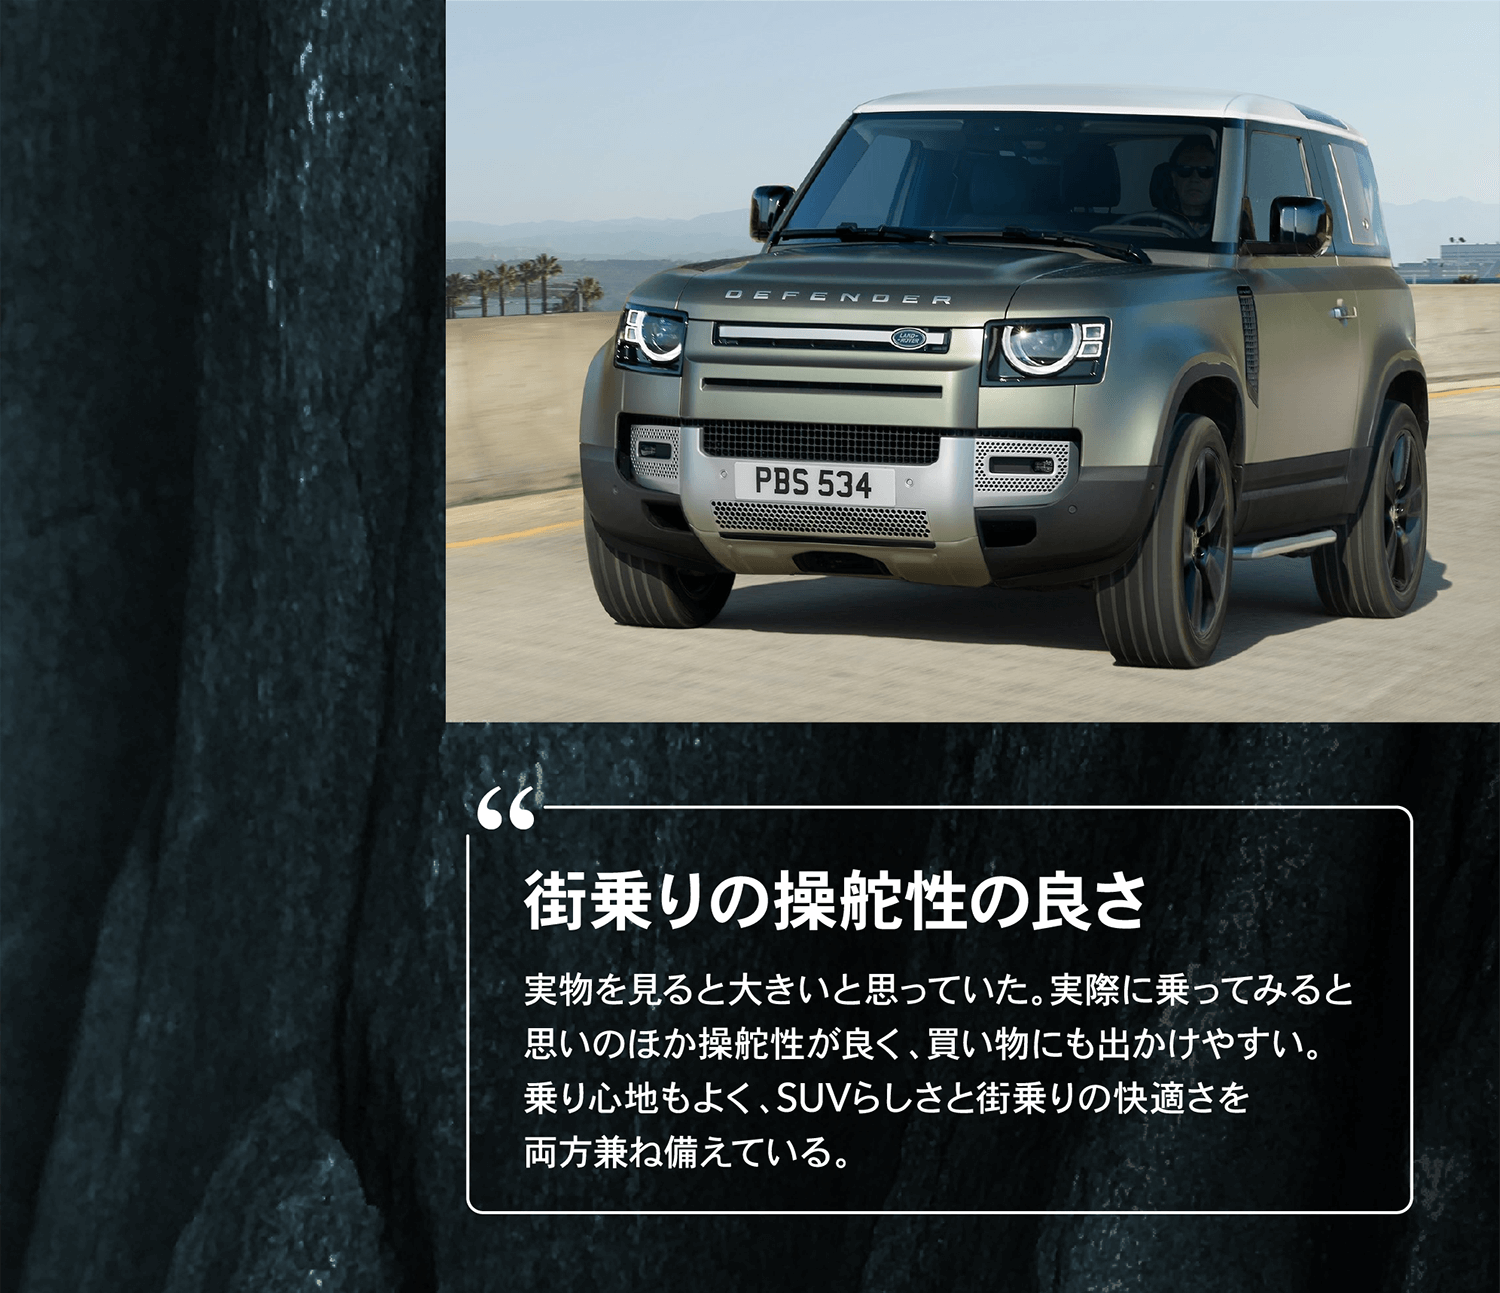 RANGE ROVER EVOQUE BRONZE COLLECTION CURATED FOR JAPAN ［特別仕様車/日本限定150台］多彩な人気装備とアクセサリーを加えた、日本限定のブロンズコレクション登場。